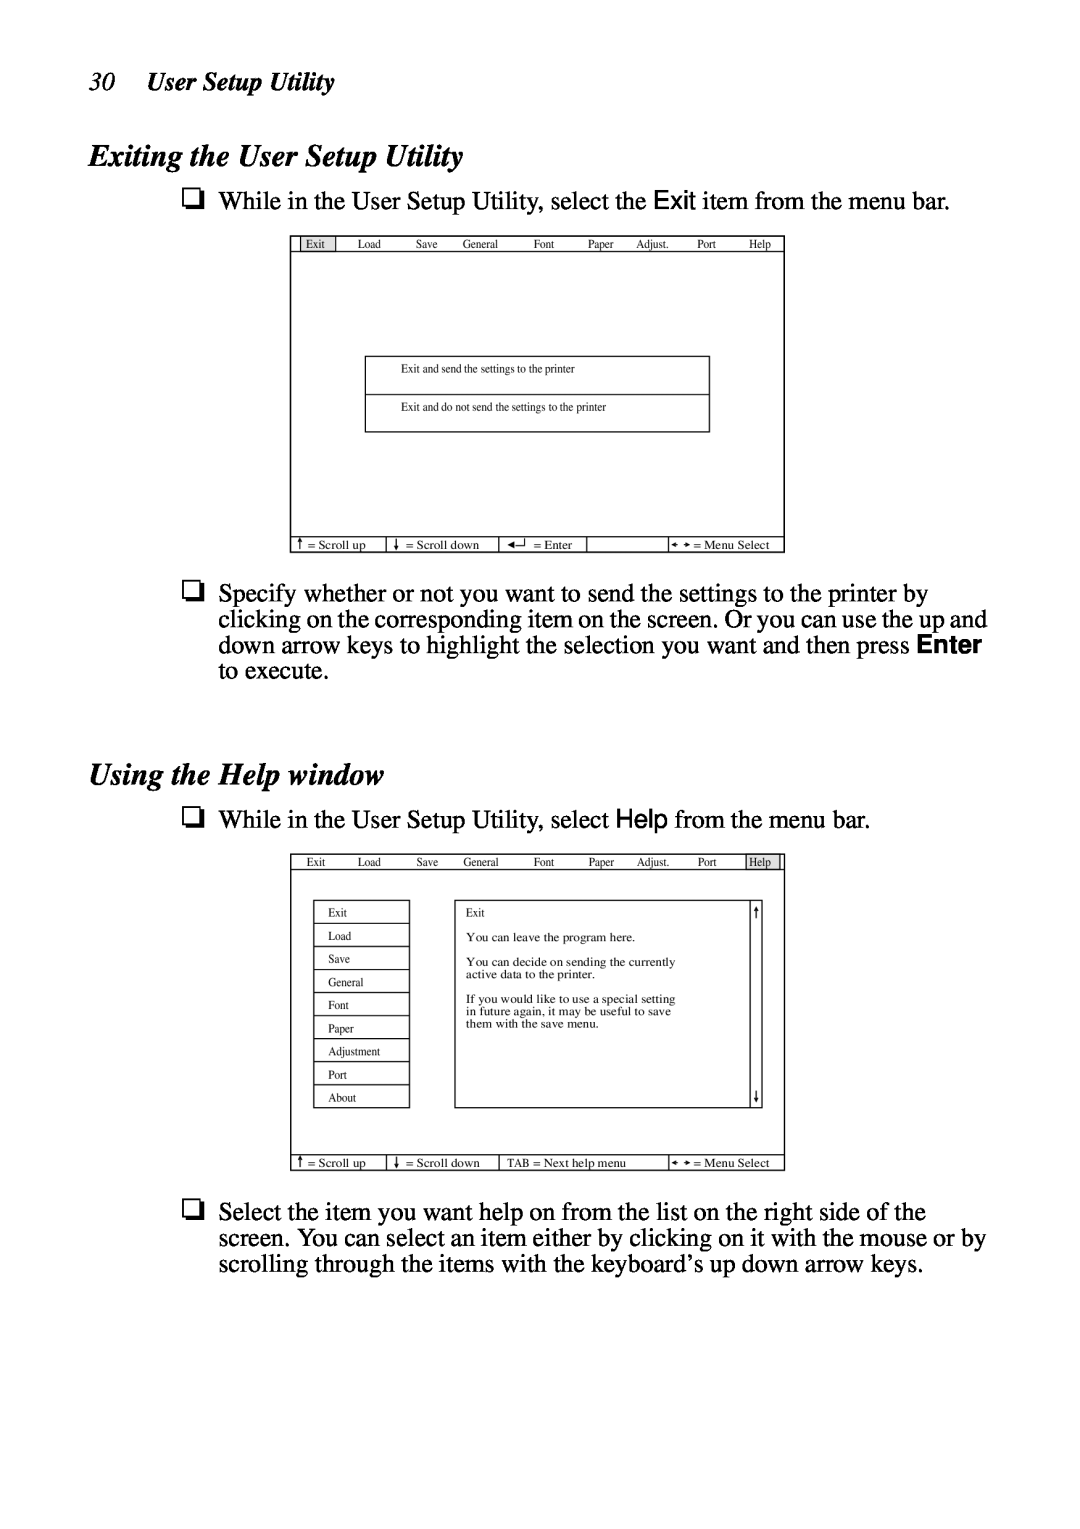 Star Micronics LC-90 NX-1010 user manual Exiting the User Setup Utility, Using the Help window 